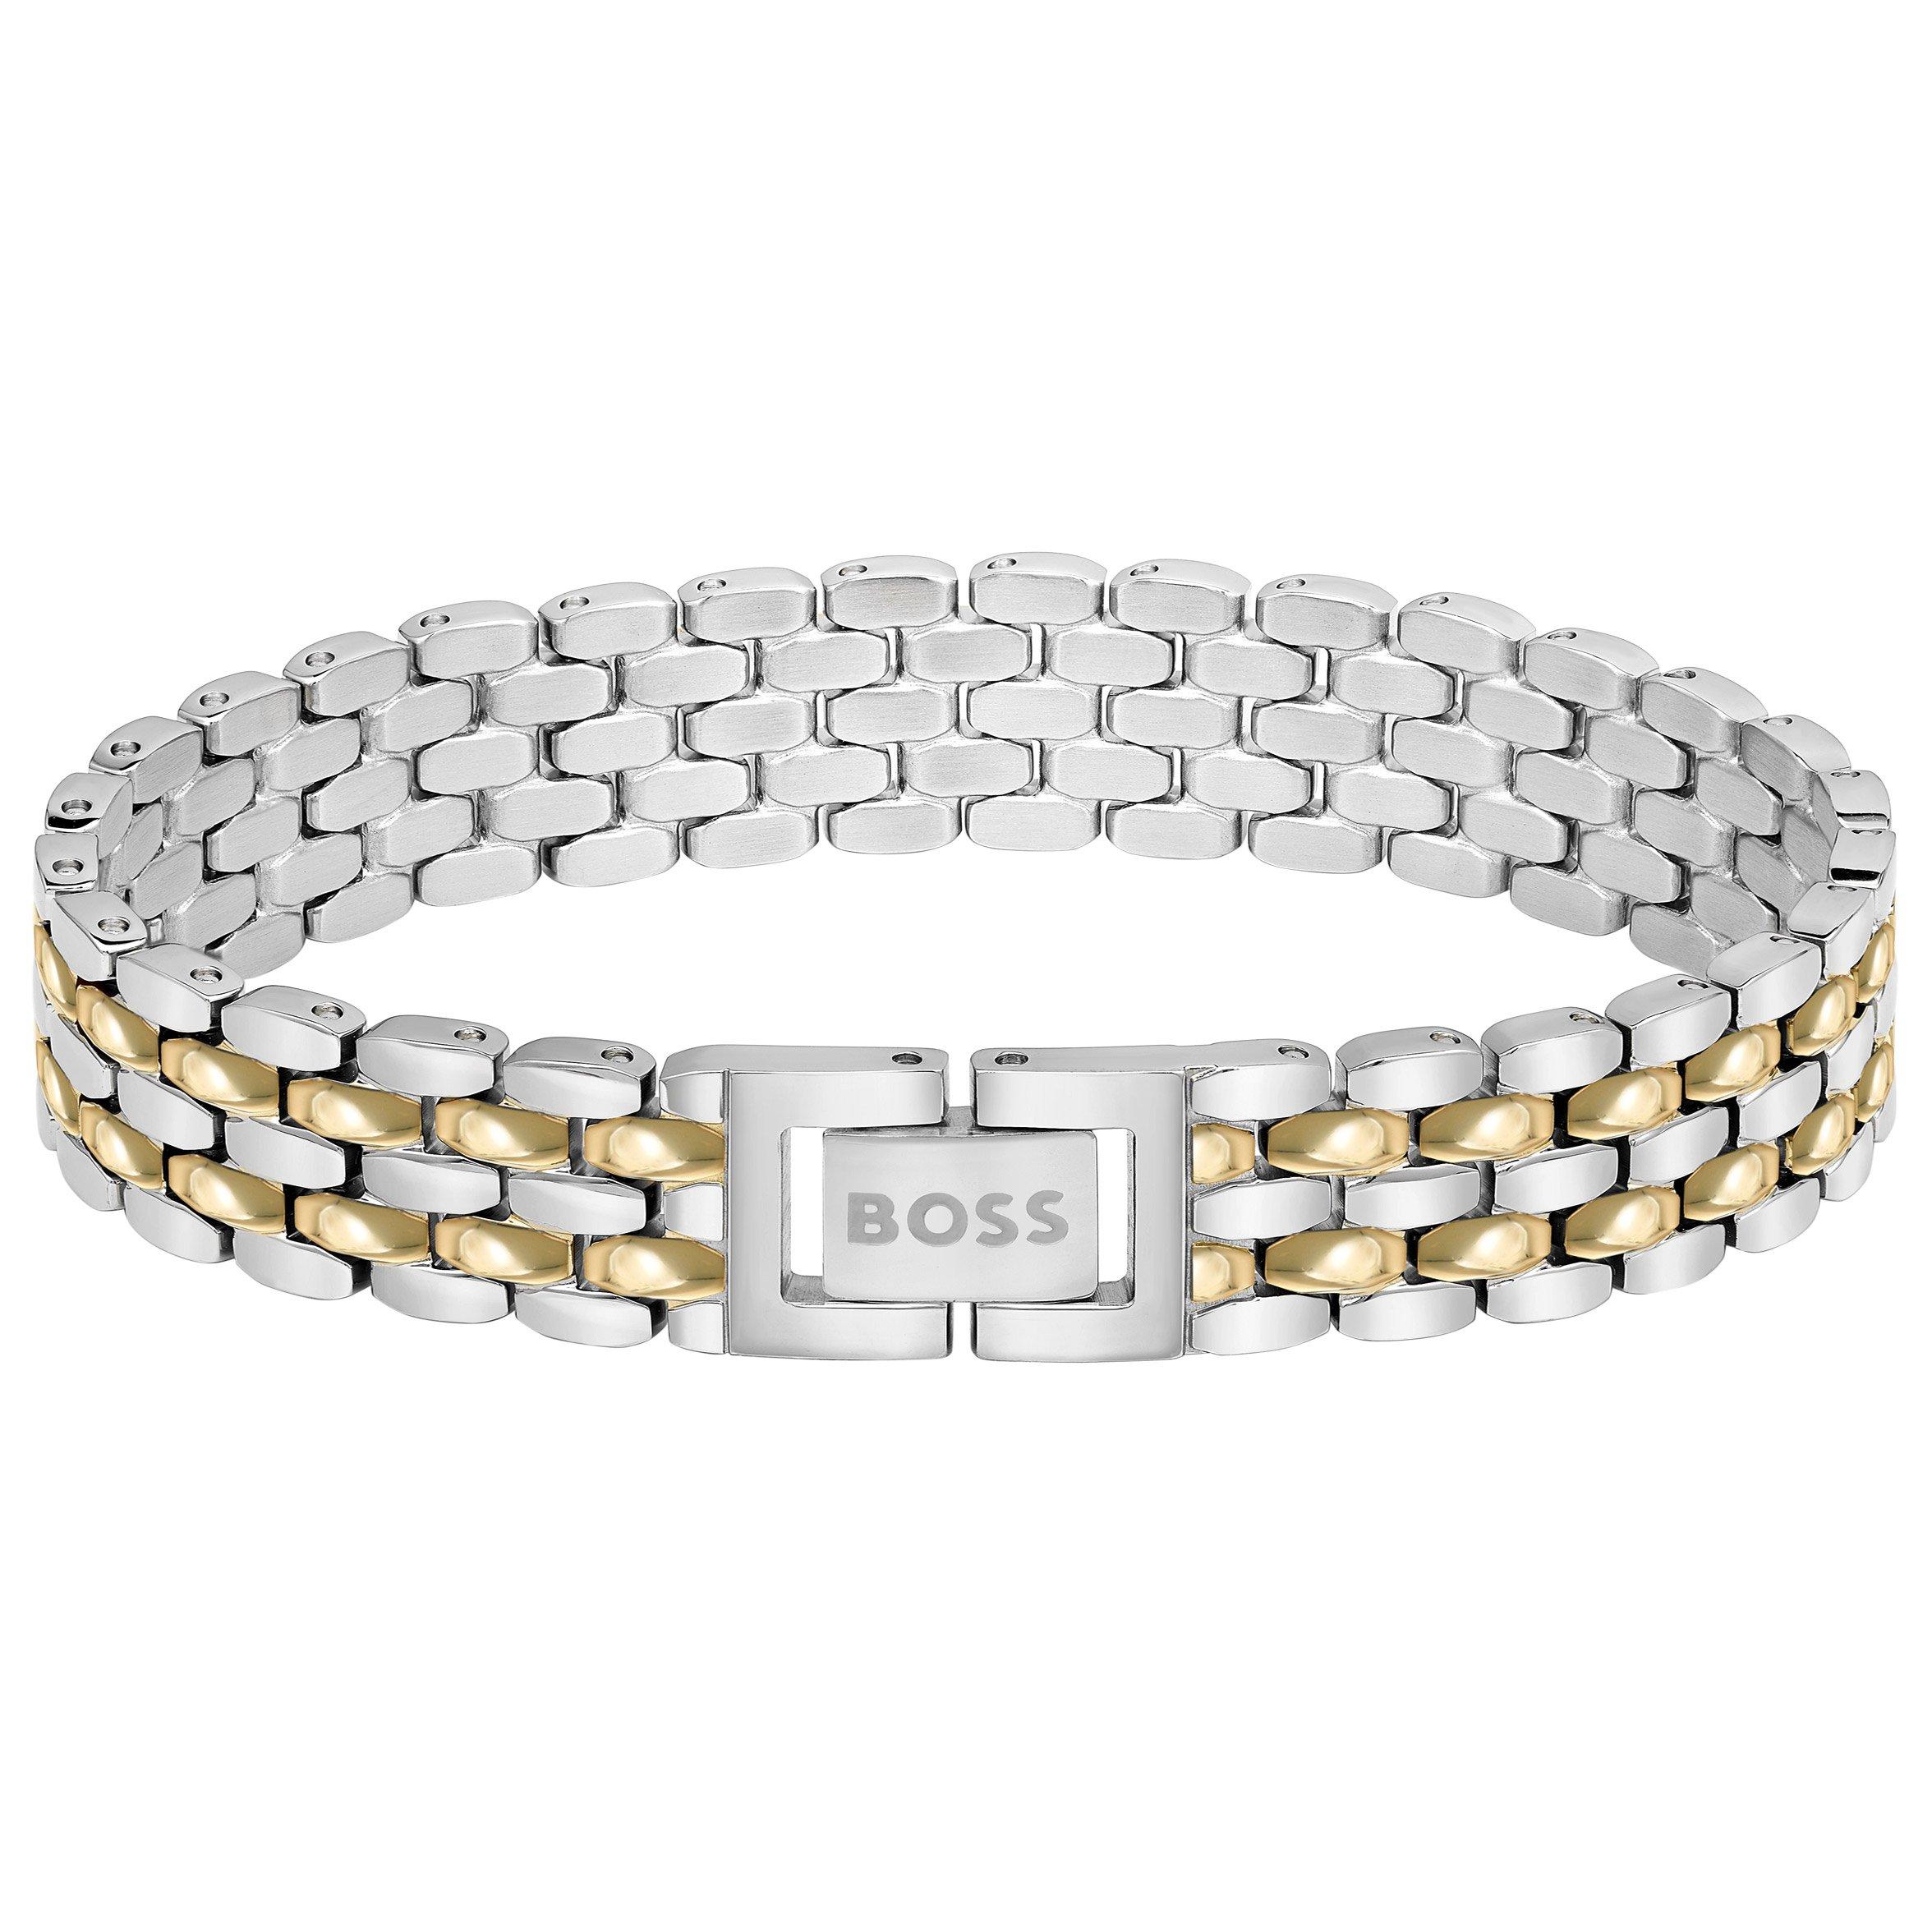 BOSS Gold Tone Ladies Bracelet | 0138539 | Beaverbrooks the Jewellers